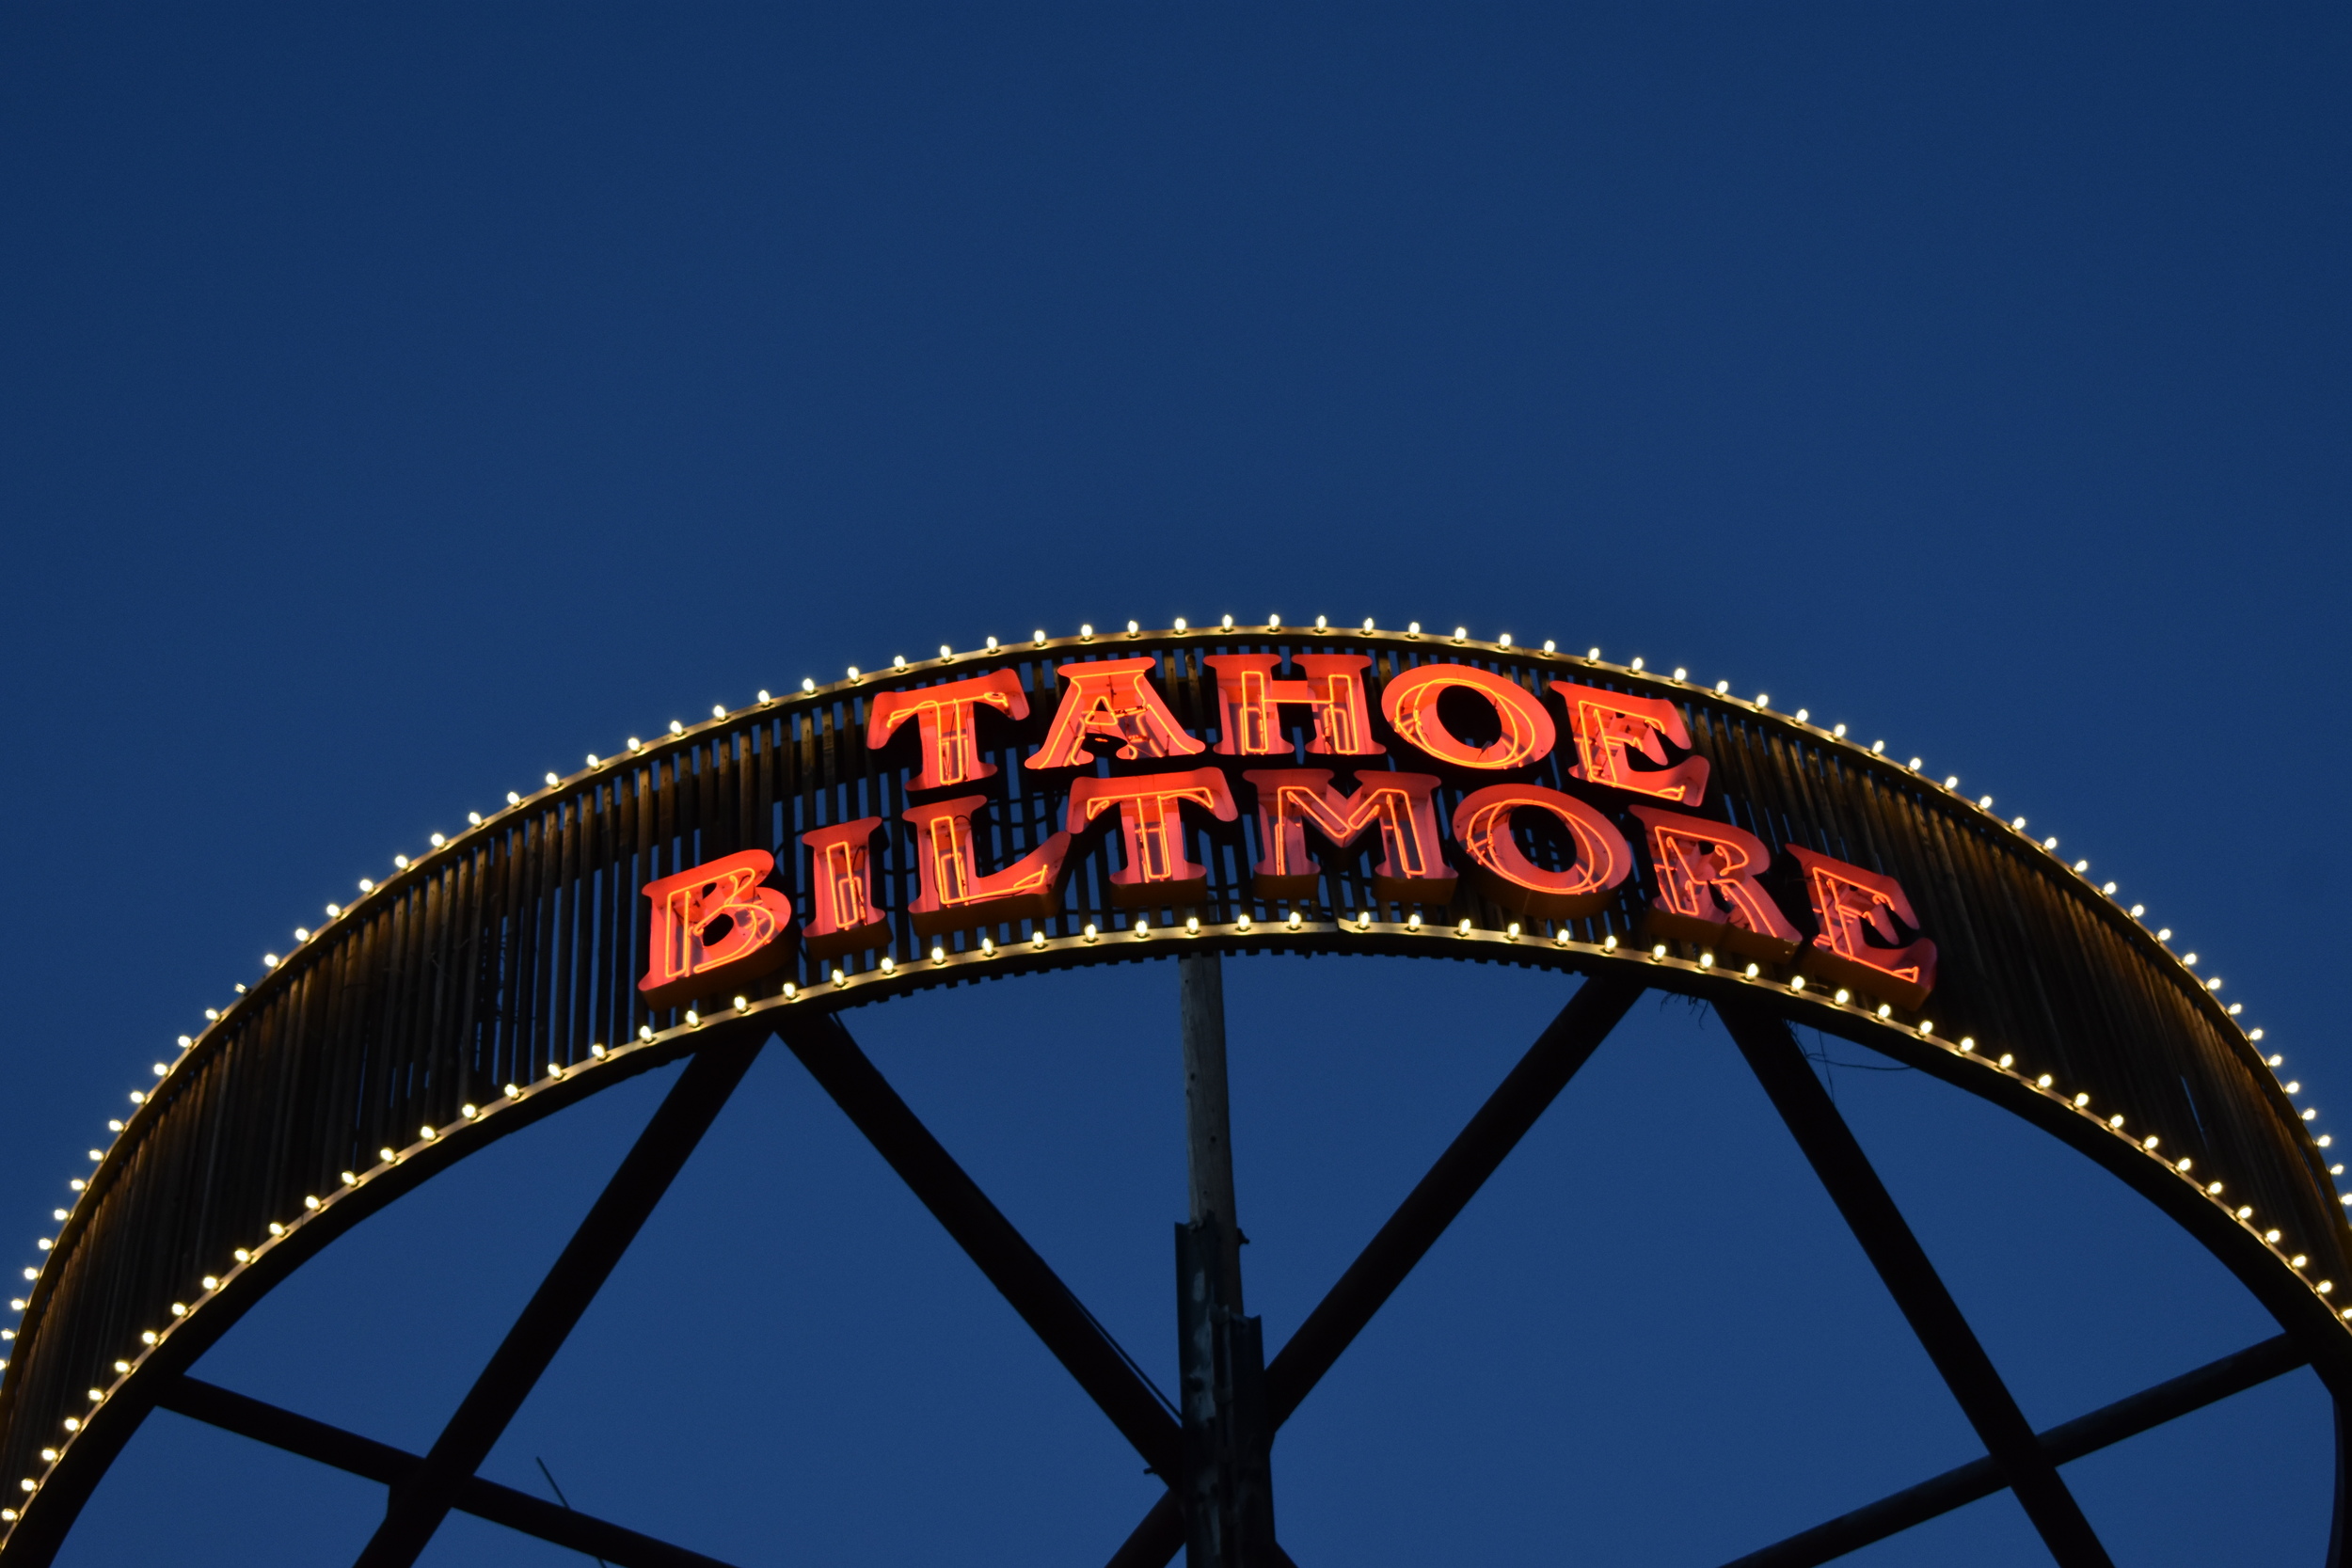 Tahoe Biltmore Lodge & Casino free standing mounted sign, Crystal Bay, Nevada